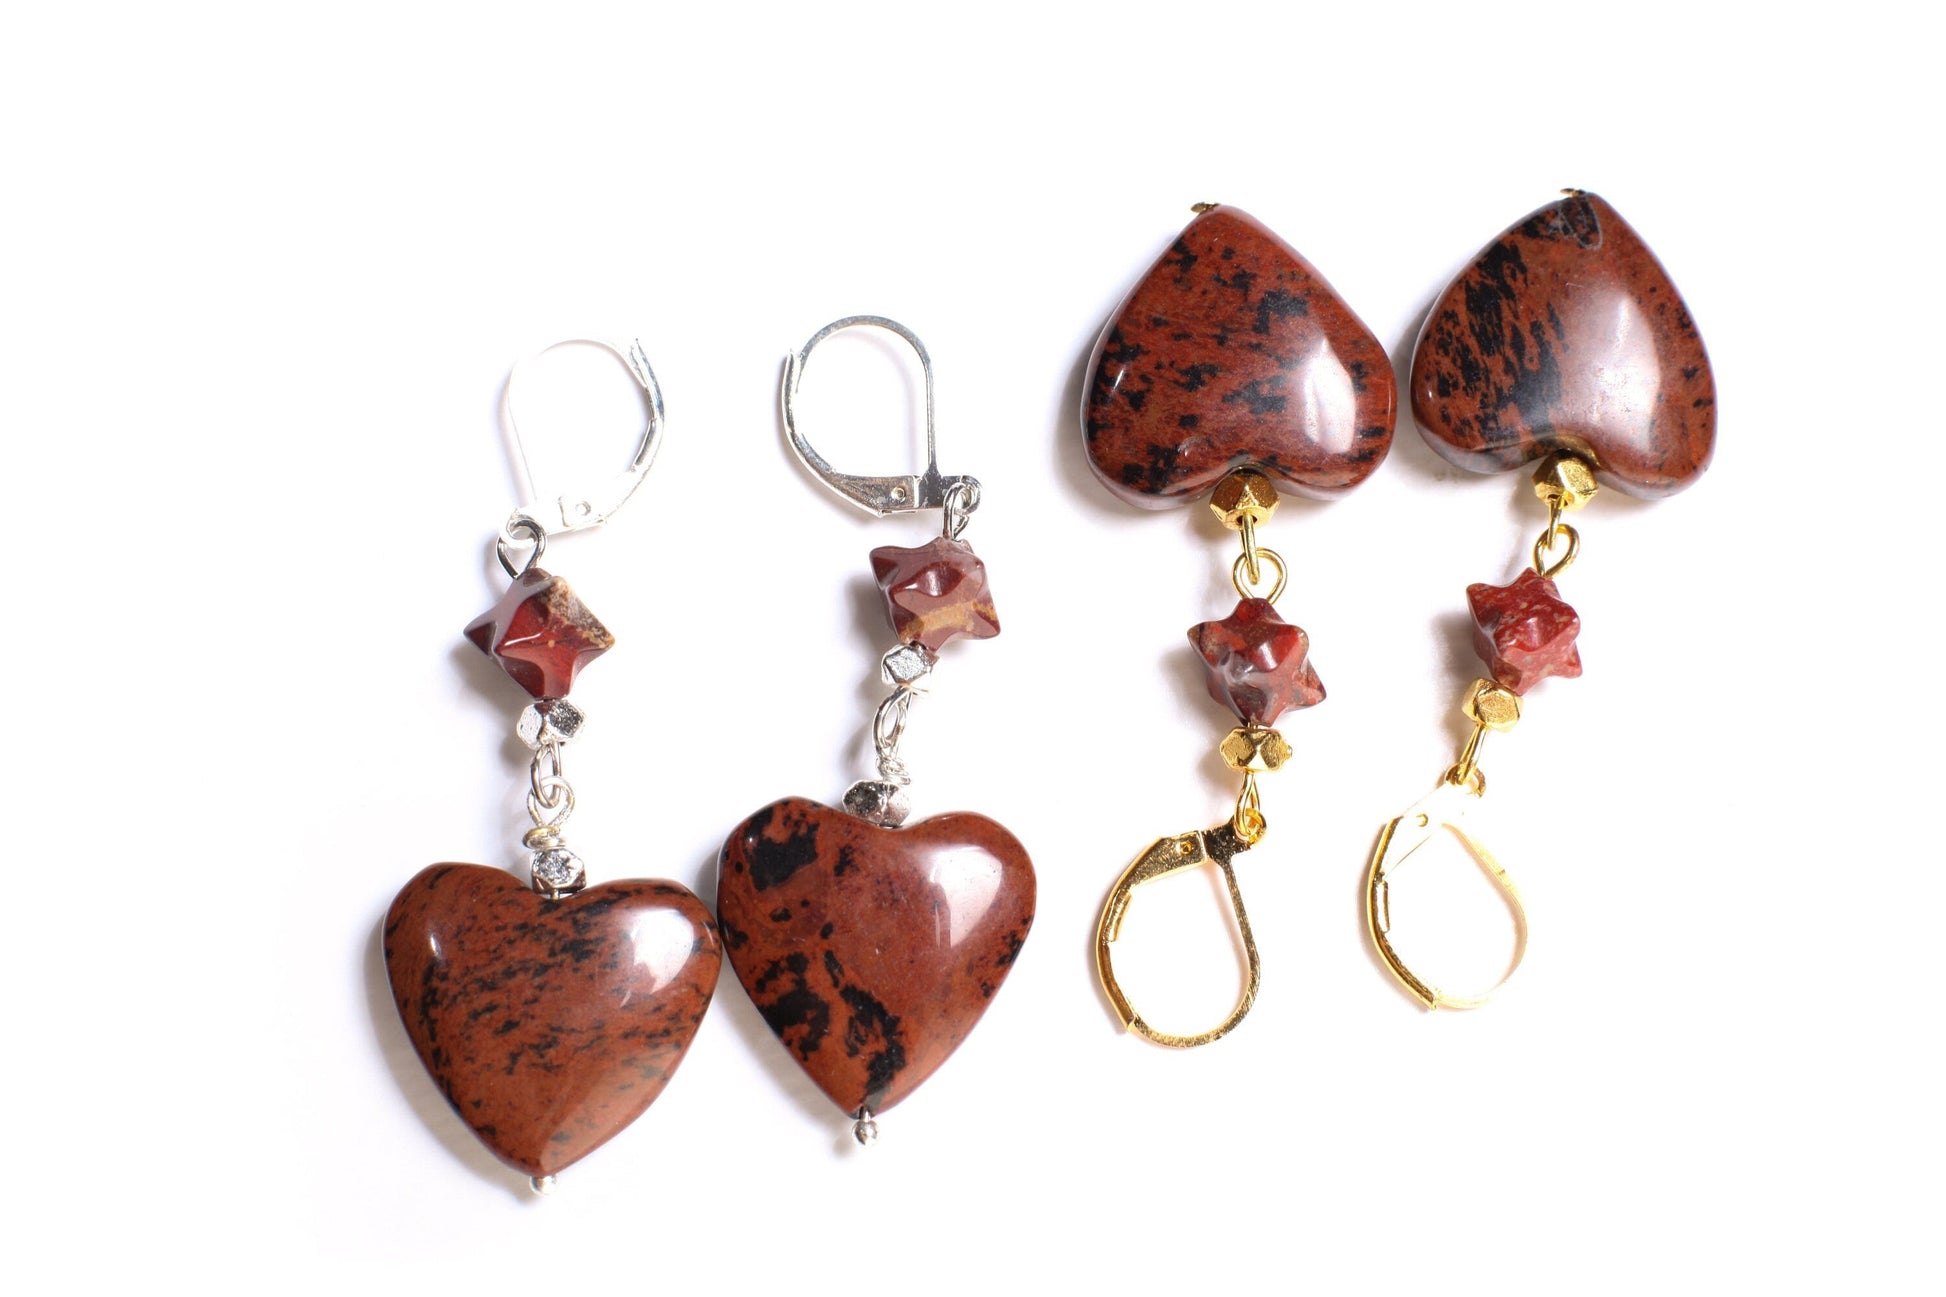 Mahogany Obsidian 20mm Large Heart, accent Poppy Jasper Star on top, Leverback Earrings, Vintage Natural Gemstone Handmade Gift For Her